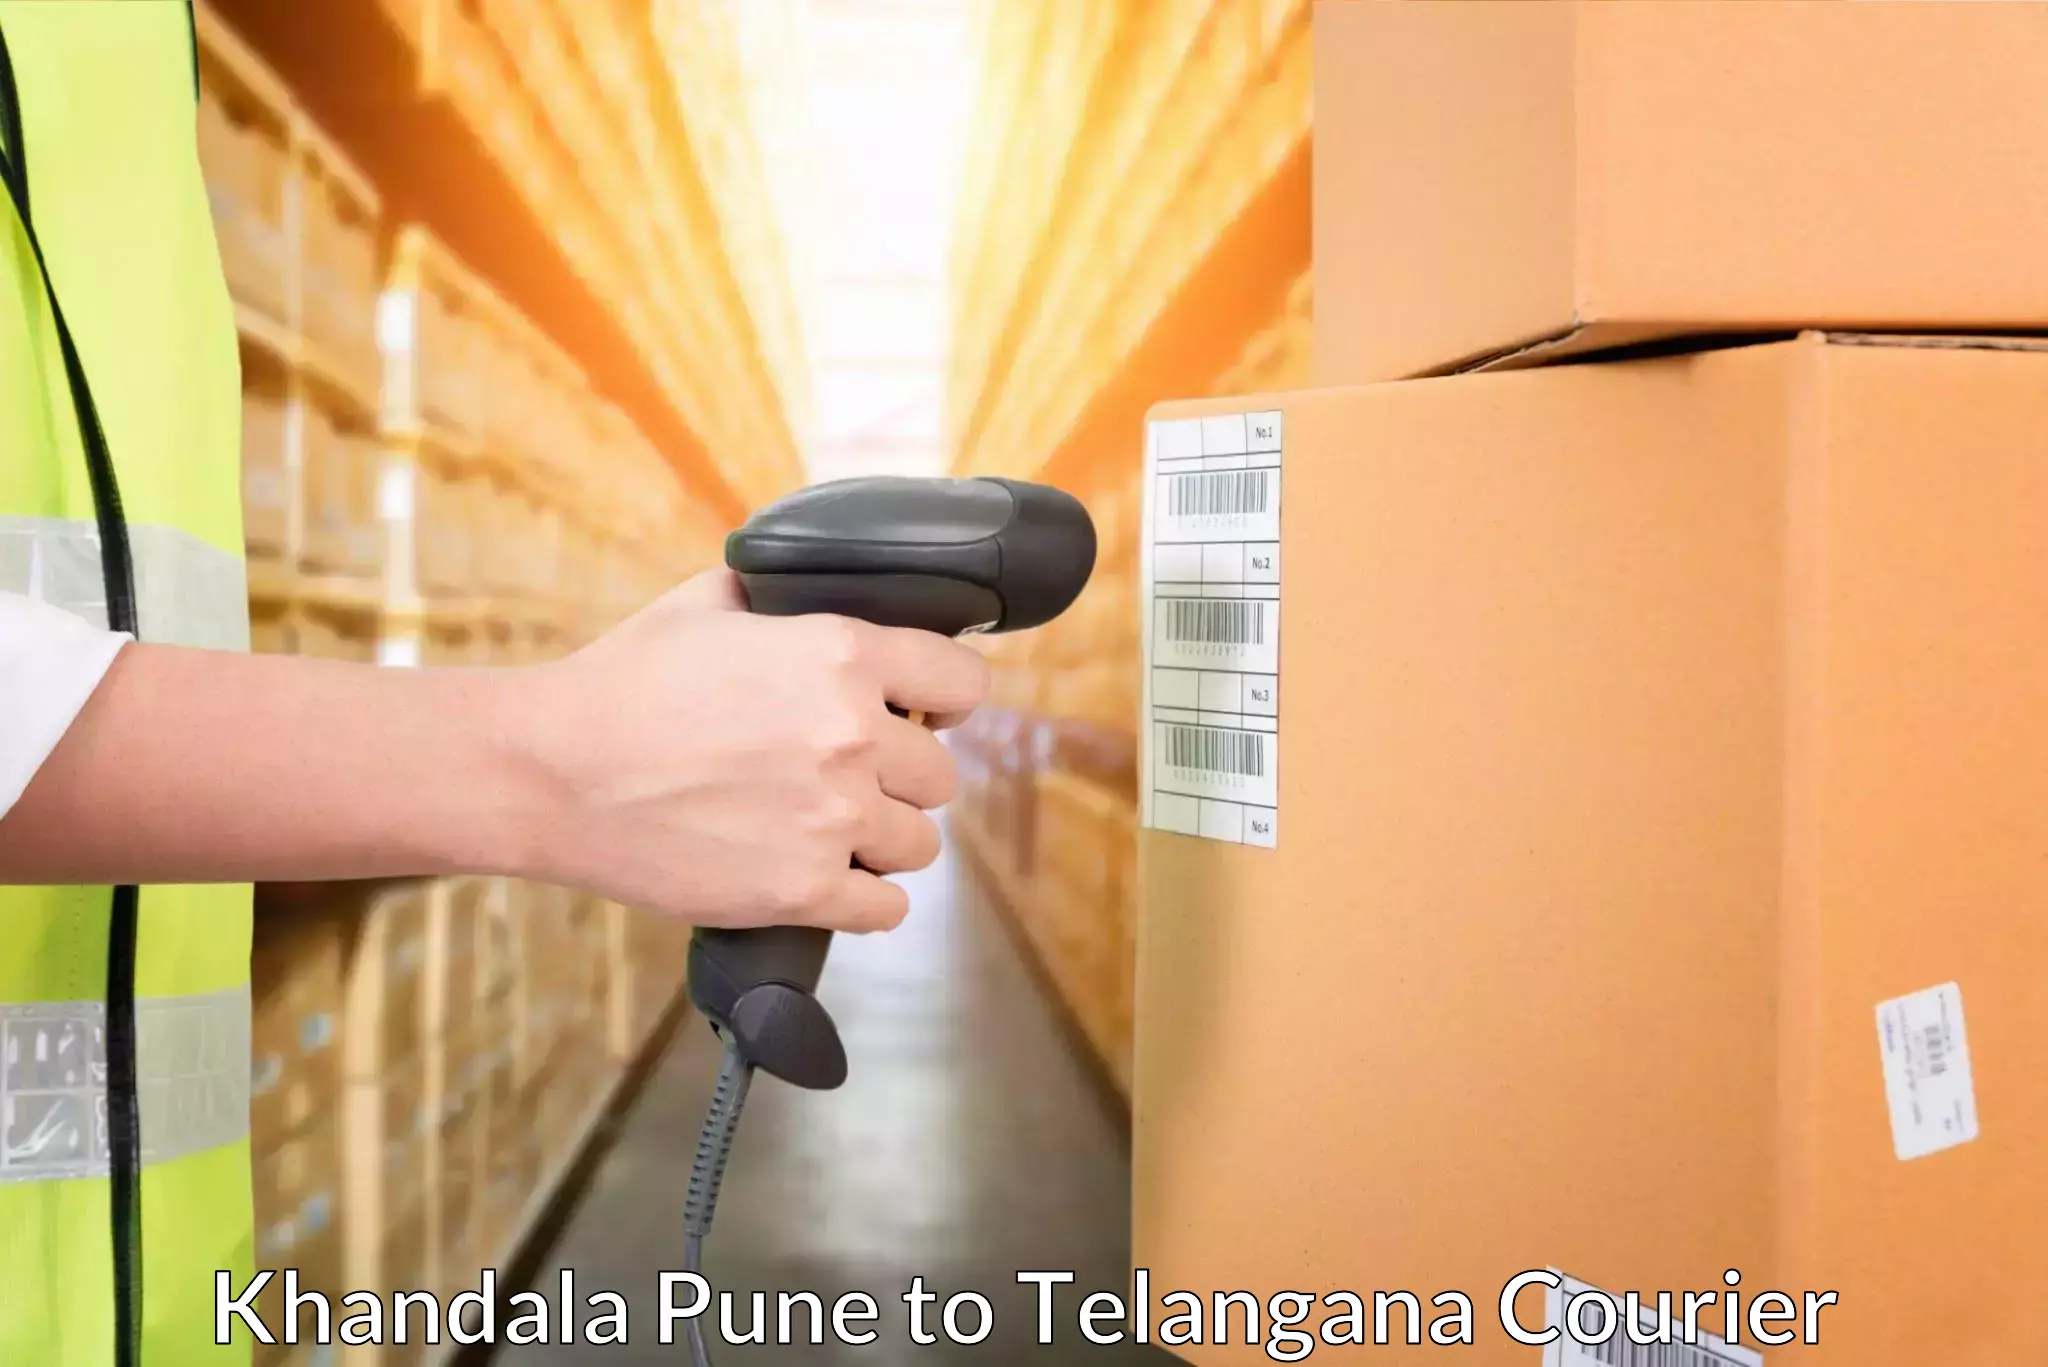 Express postal services Khandala Pune to Nakerakal